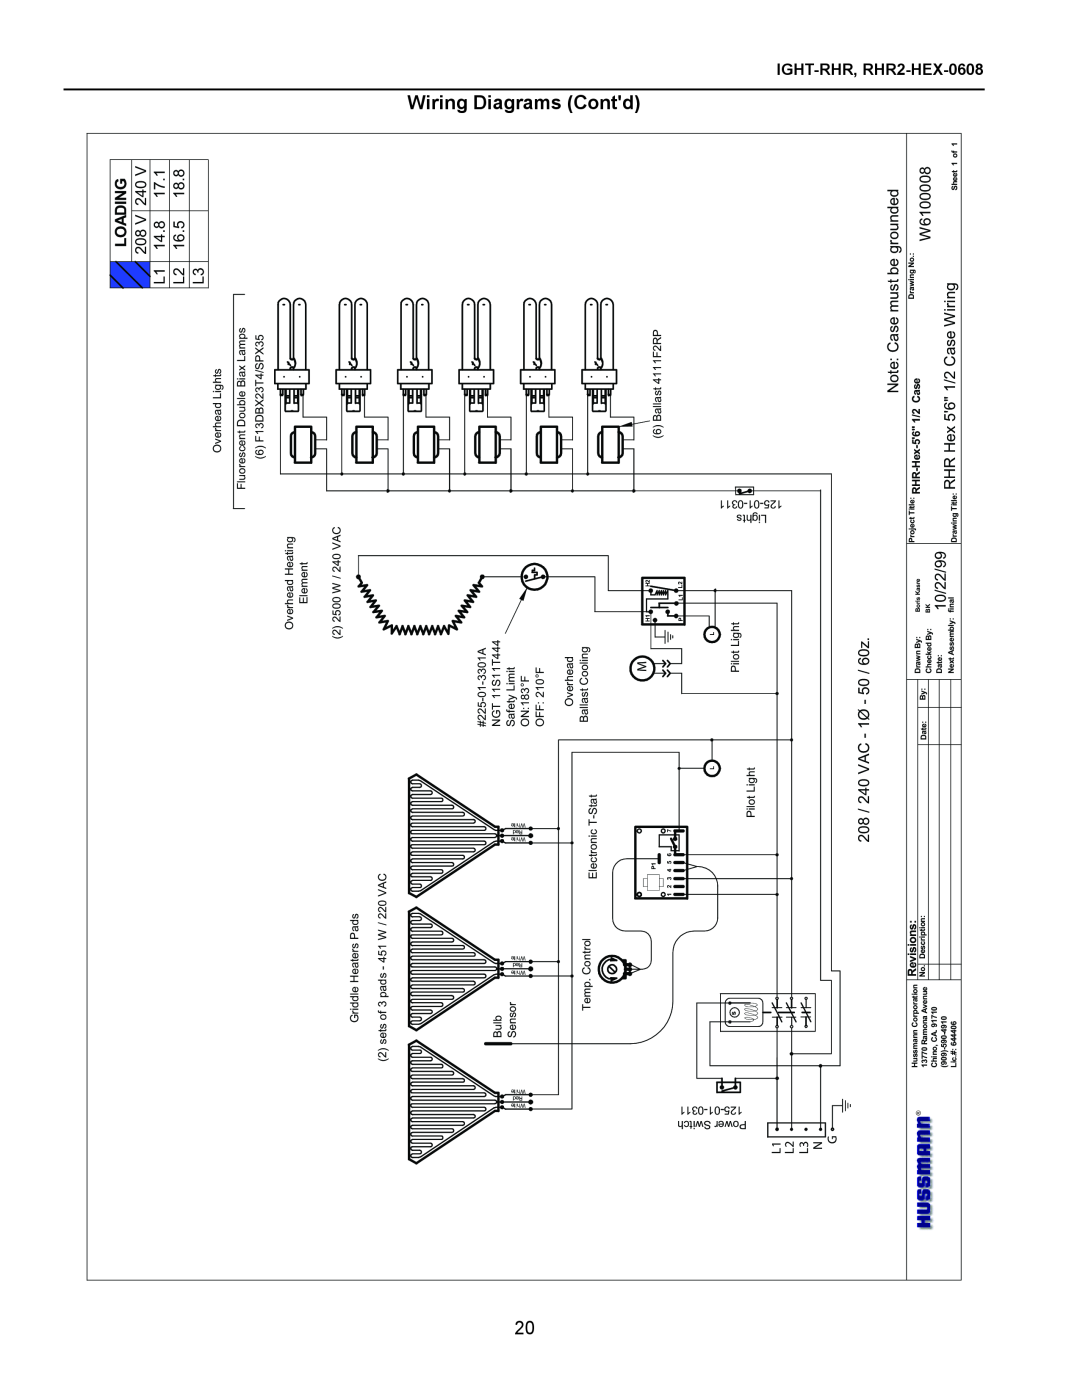 hussman rhr-hex Wiring Diagrams Contd, Loading, Ight-Rhr, W6100008, 10/22/99, Drawing Title RHR Hex 56 1/2 Case Wiring 